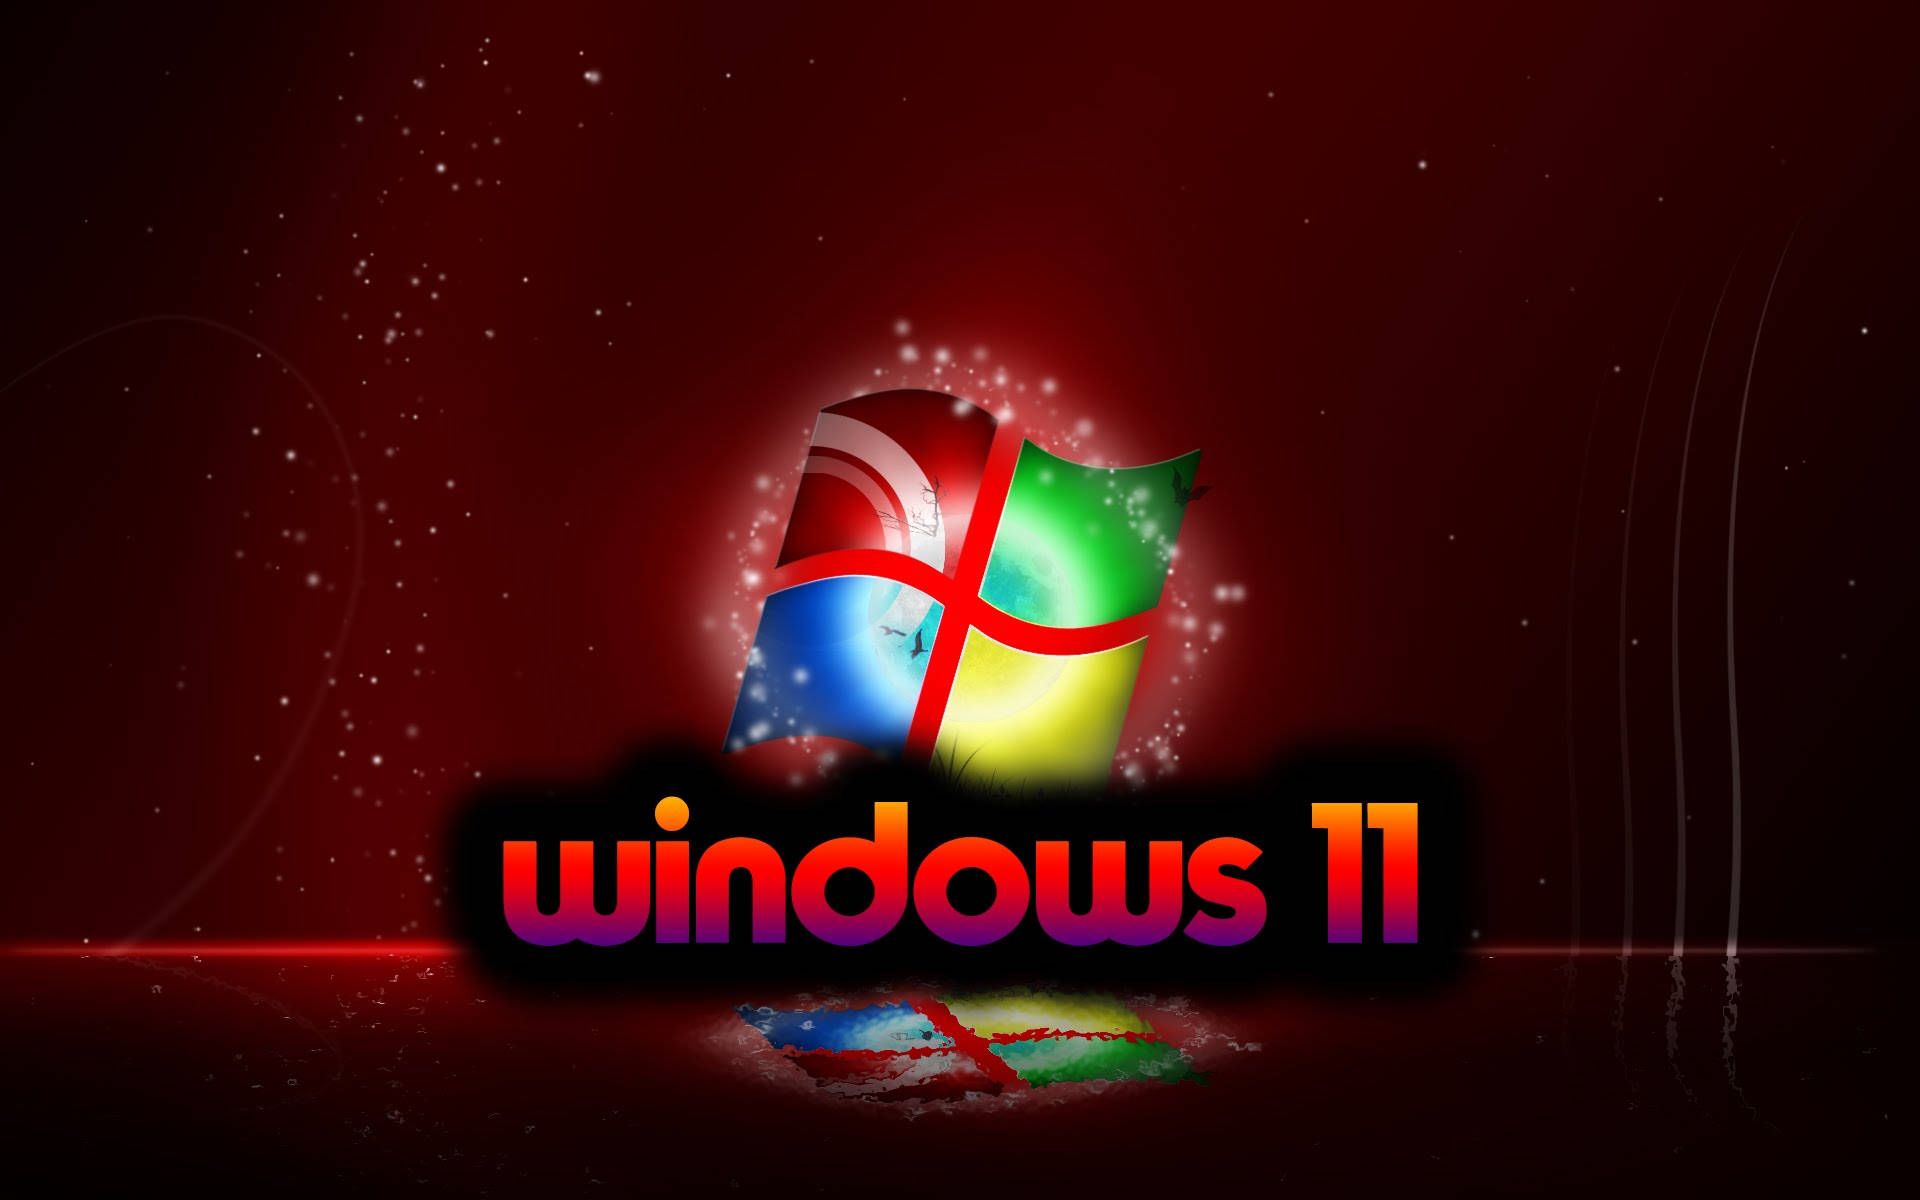 Windows 11 Wallpaper Full HD, 4K Free to Use